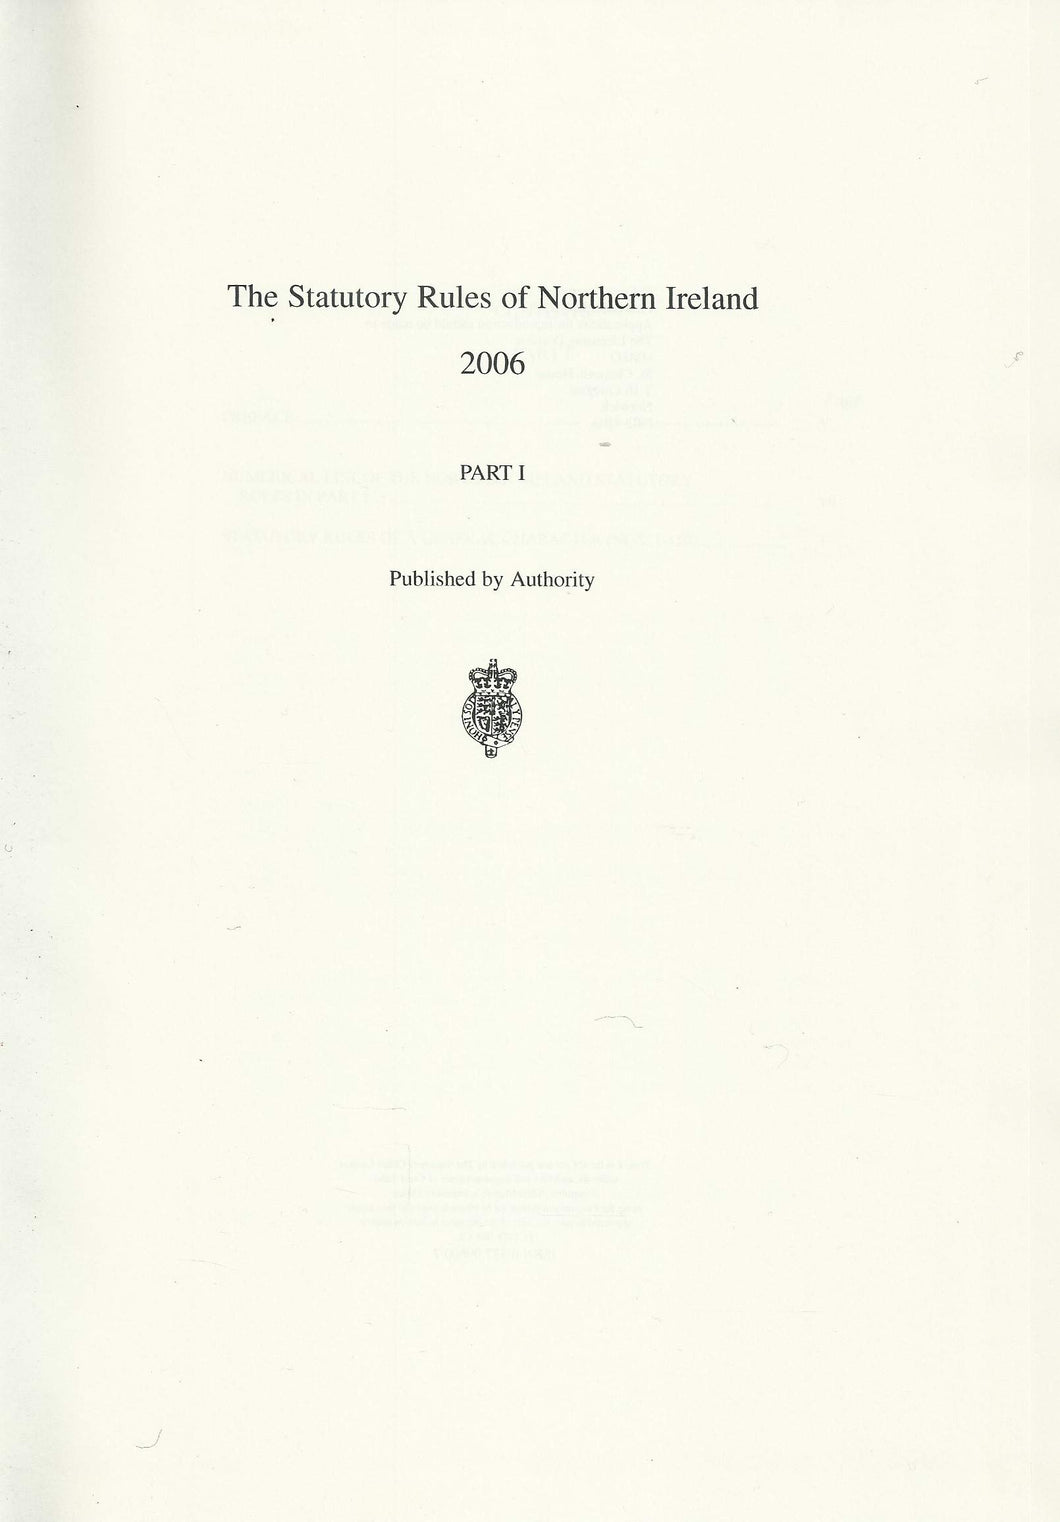 Northern Ireland Statutory Rules 2006, Part I (Part 1) - Two-Volume Set. The Statutory Rules of Northern Ireland